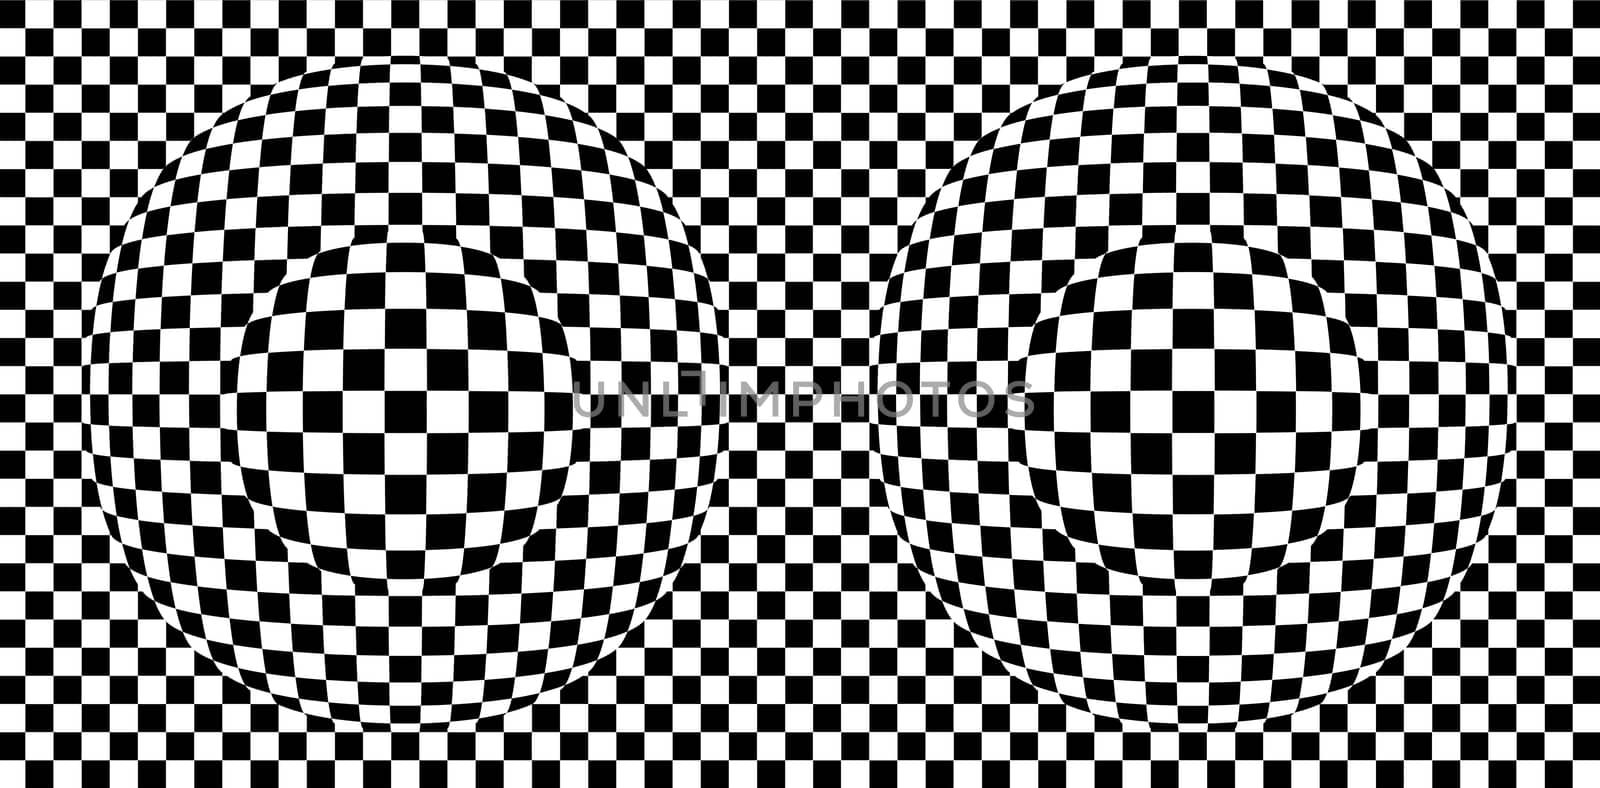 checkered texture 3d background by vitanovski